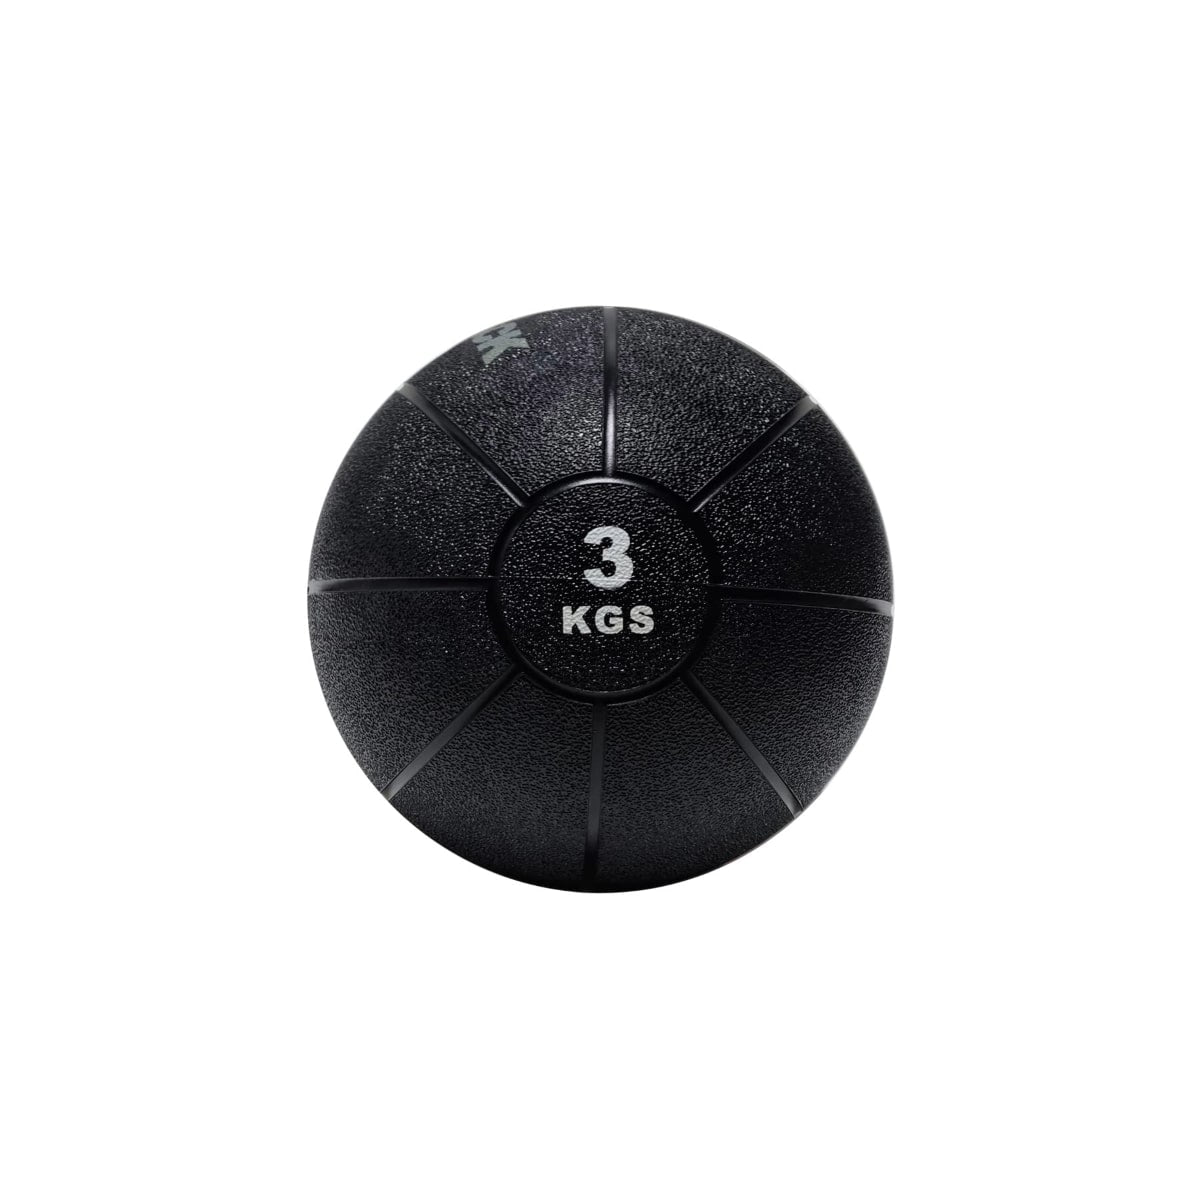 Attack Fitness - Medicine Balls - Black - Wharf Fitness